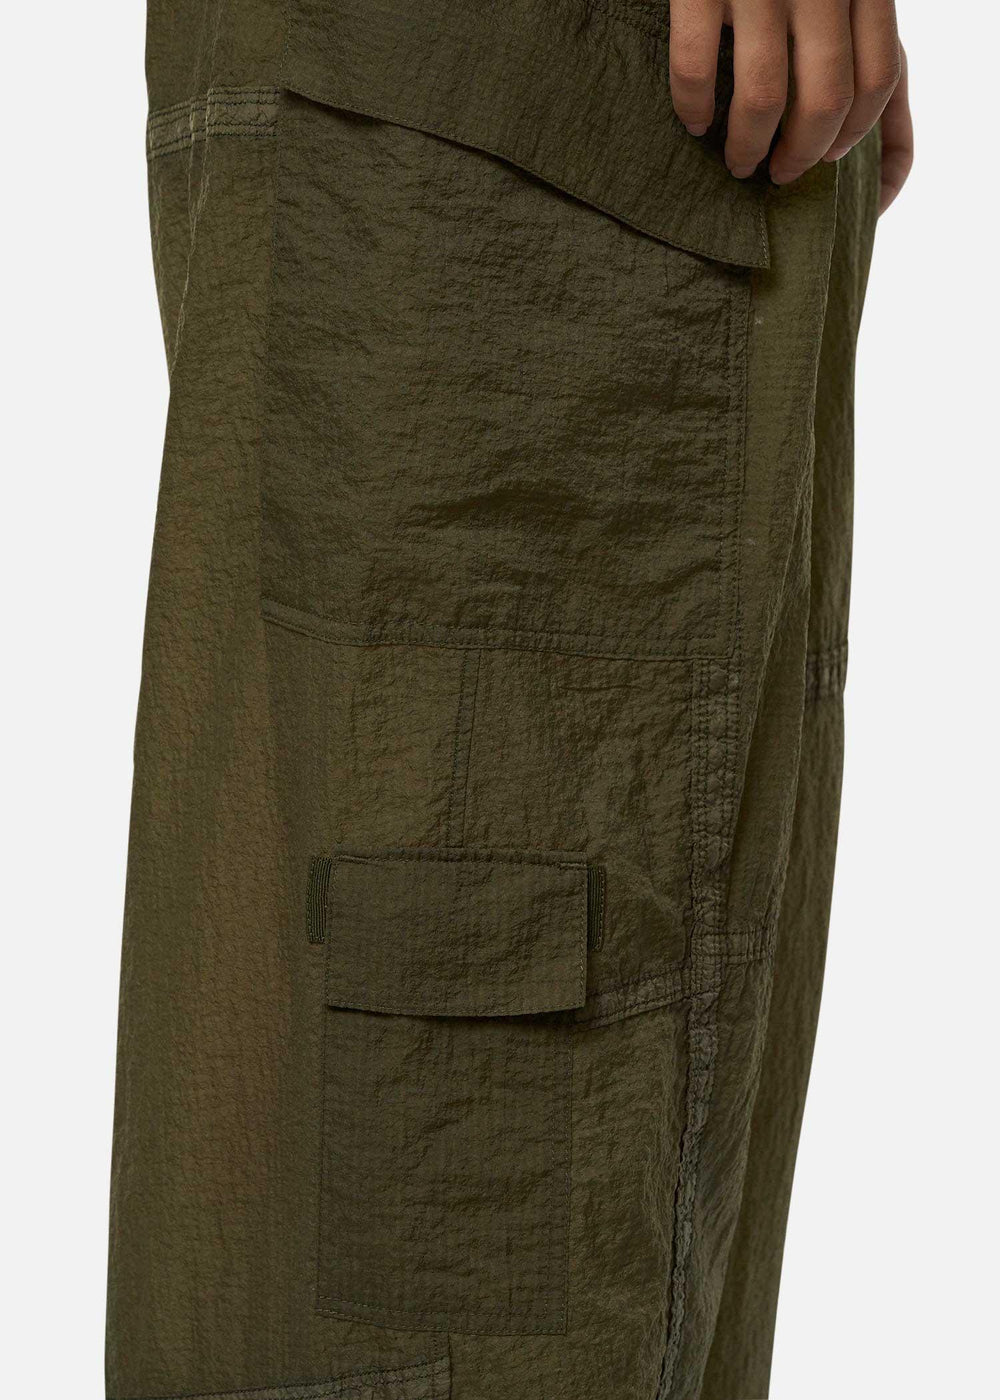 Parasuit Trouser (W) Olive | RÆBURN Womenswear